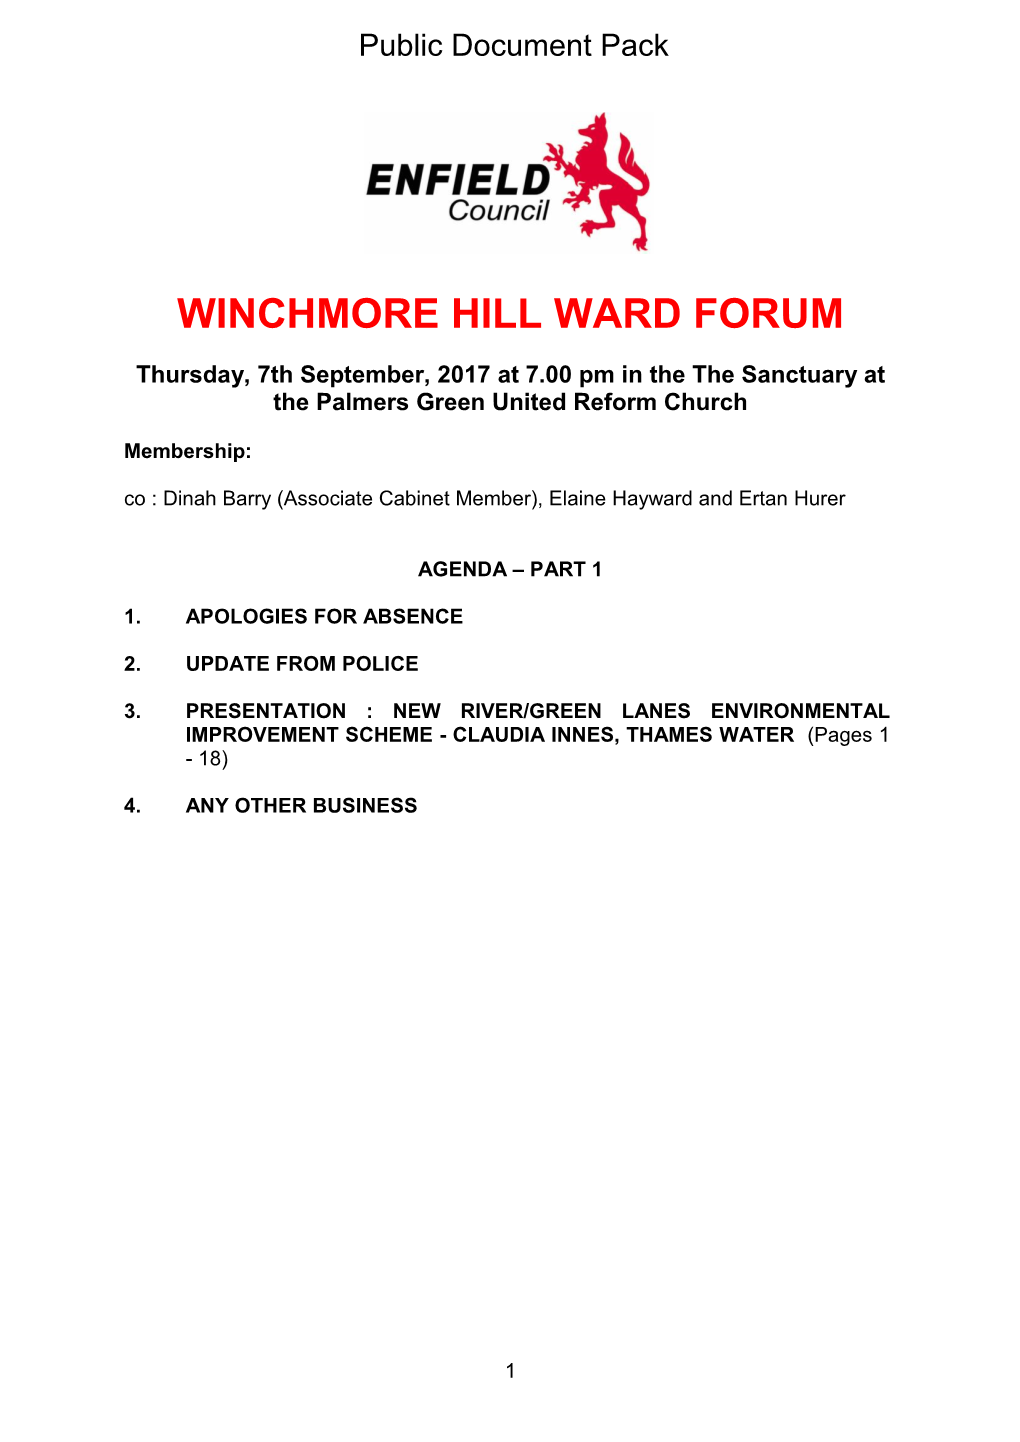 (Public Pack)Agenda Document for Winchmore Hill Ward Forum, 07/09